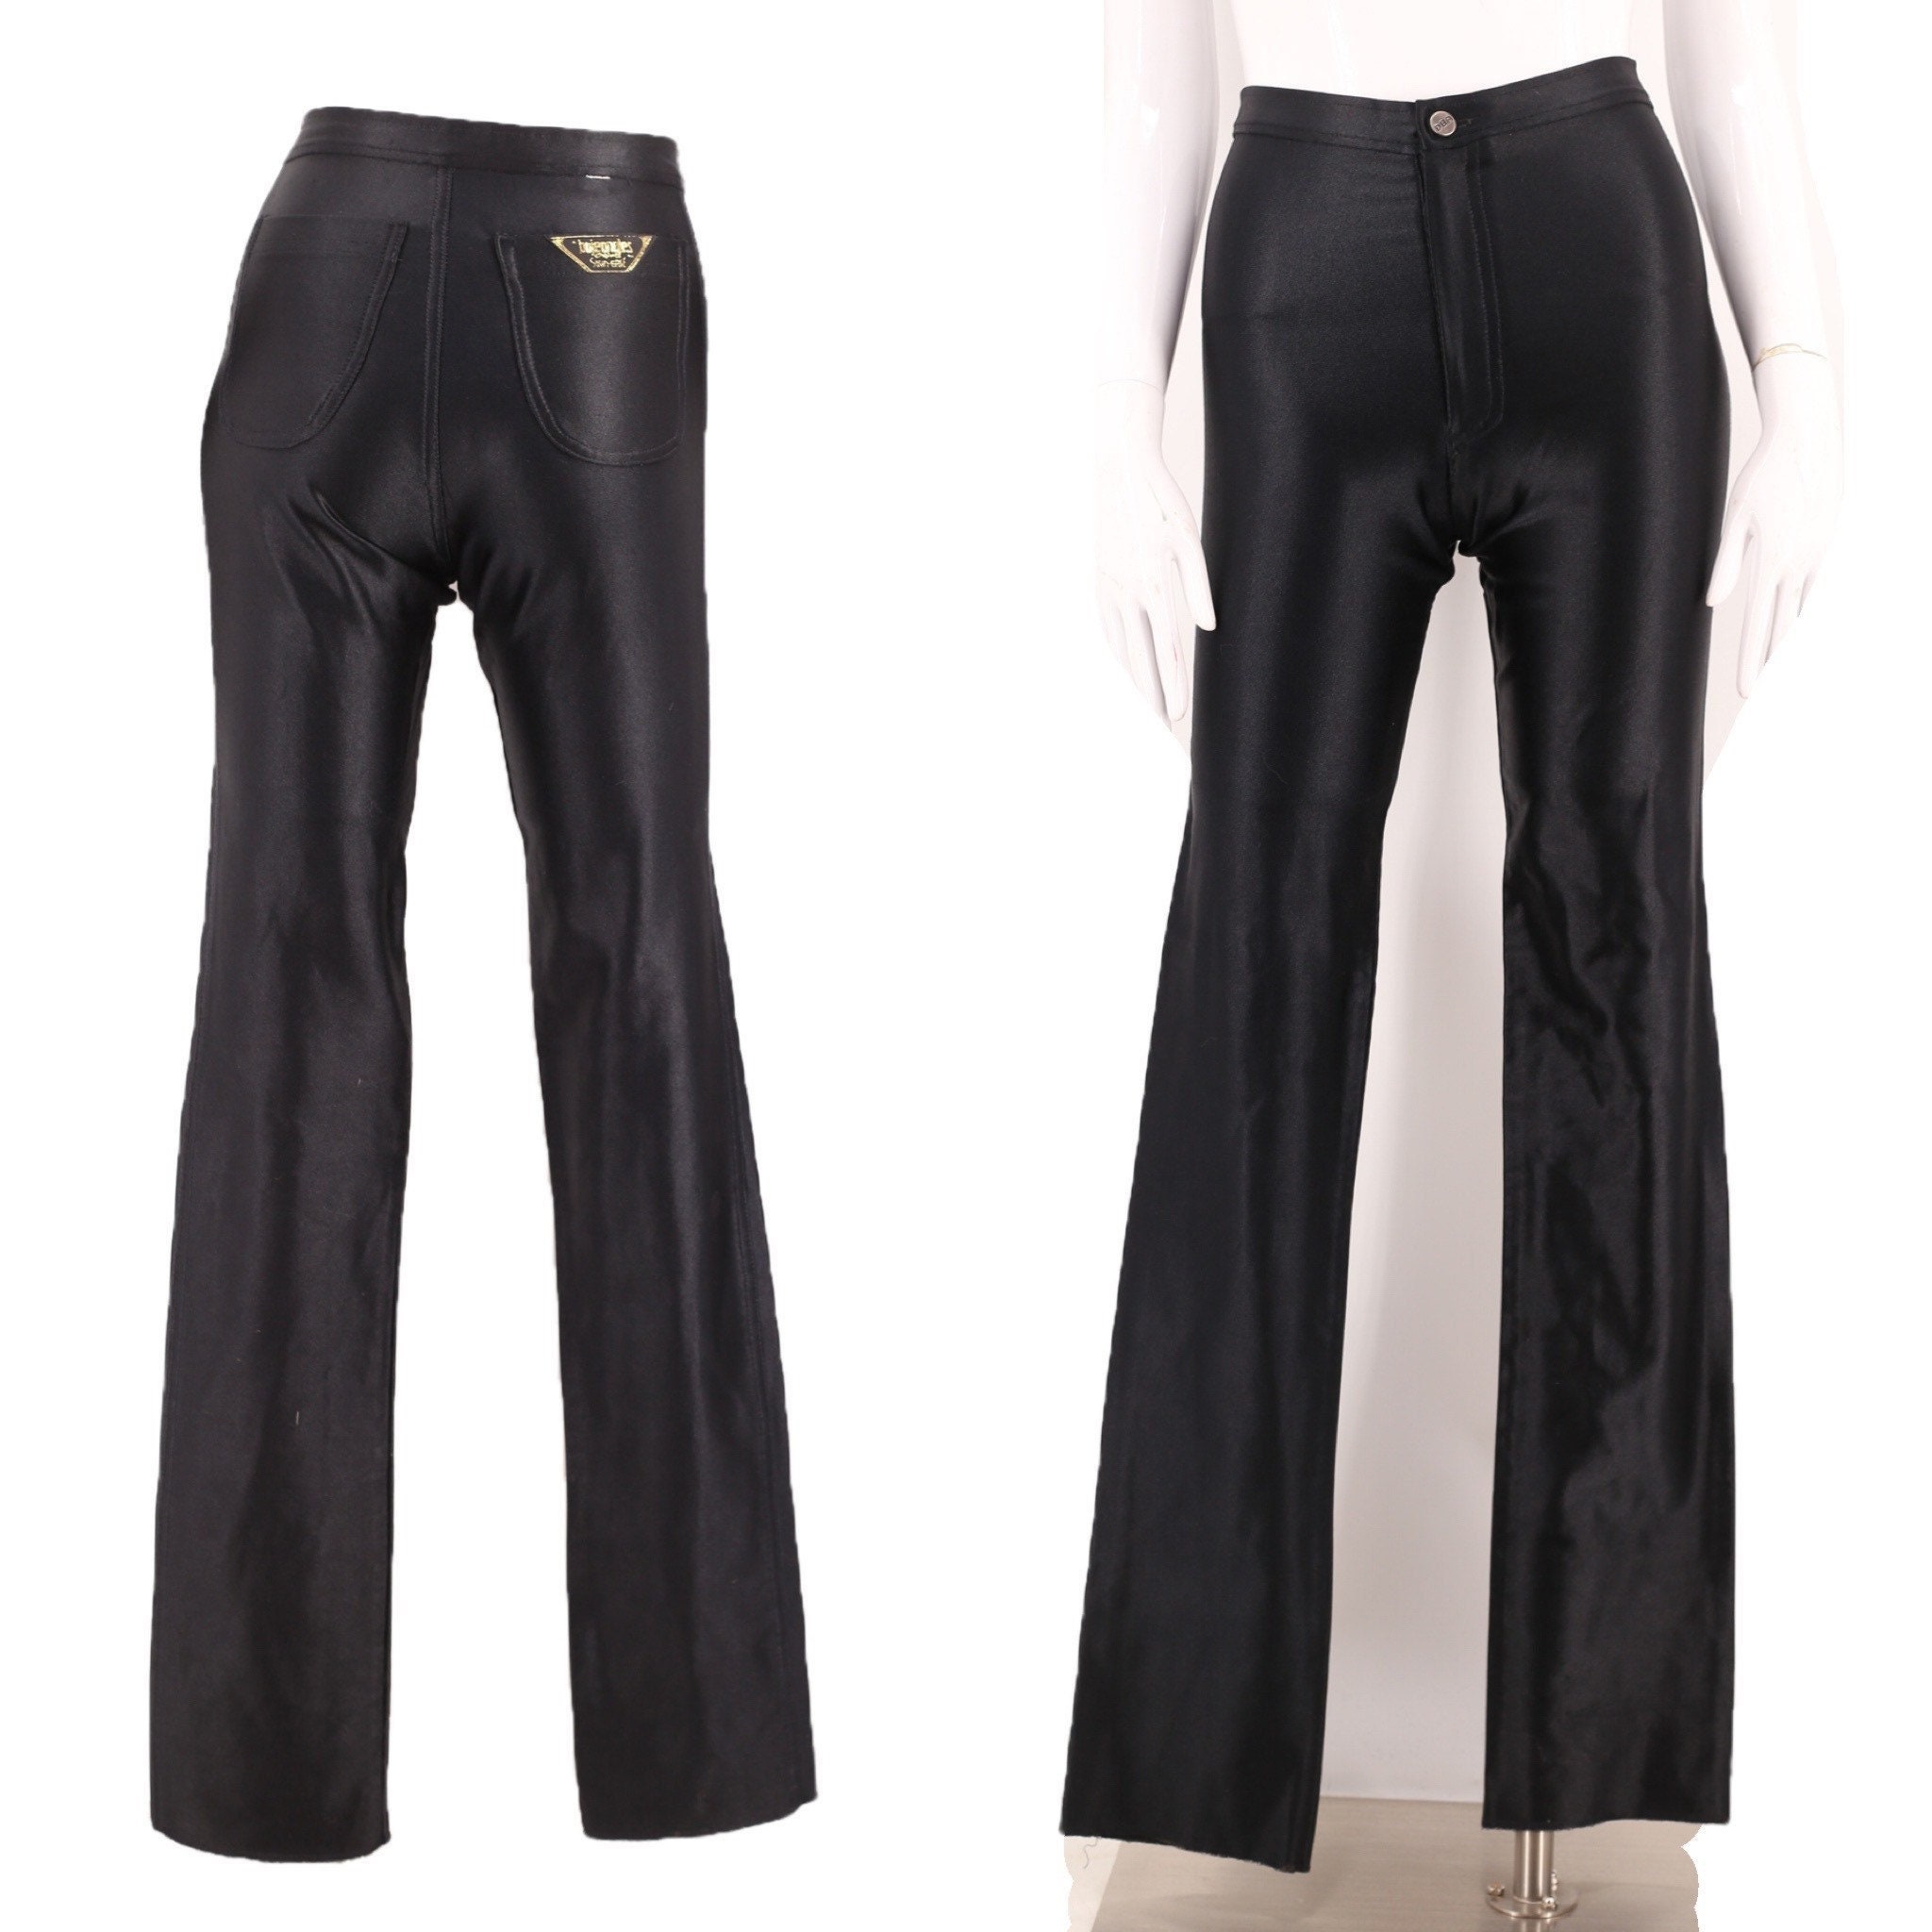  Metallic Shiny Pants for Womens Vintage 70s 80s Disco